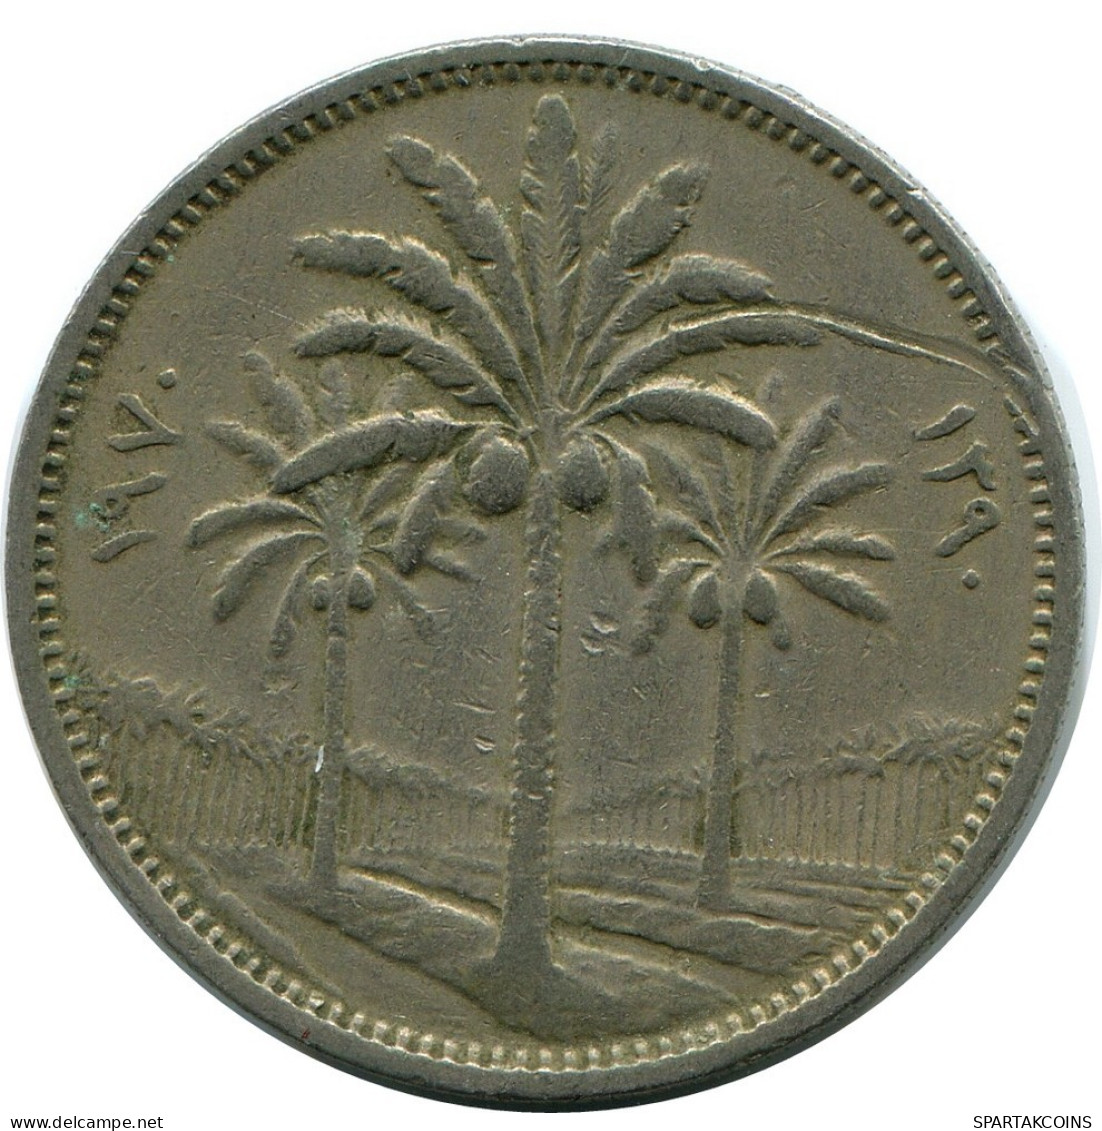 50 FILS 1970 IRAQ Moneda #AP347.E.A - Irak